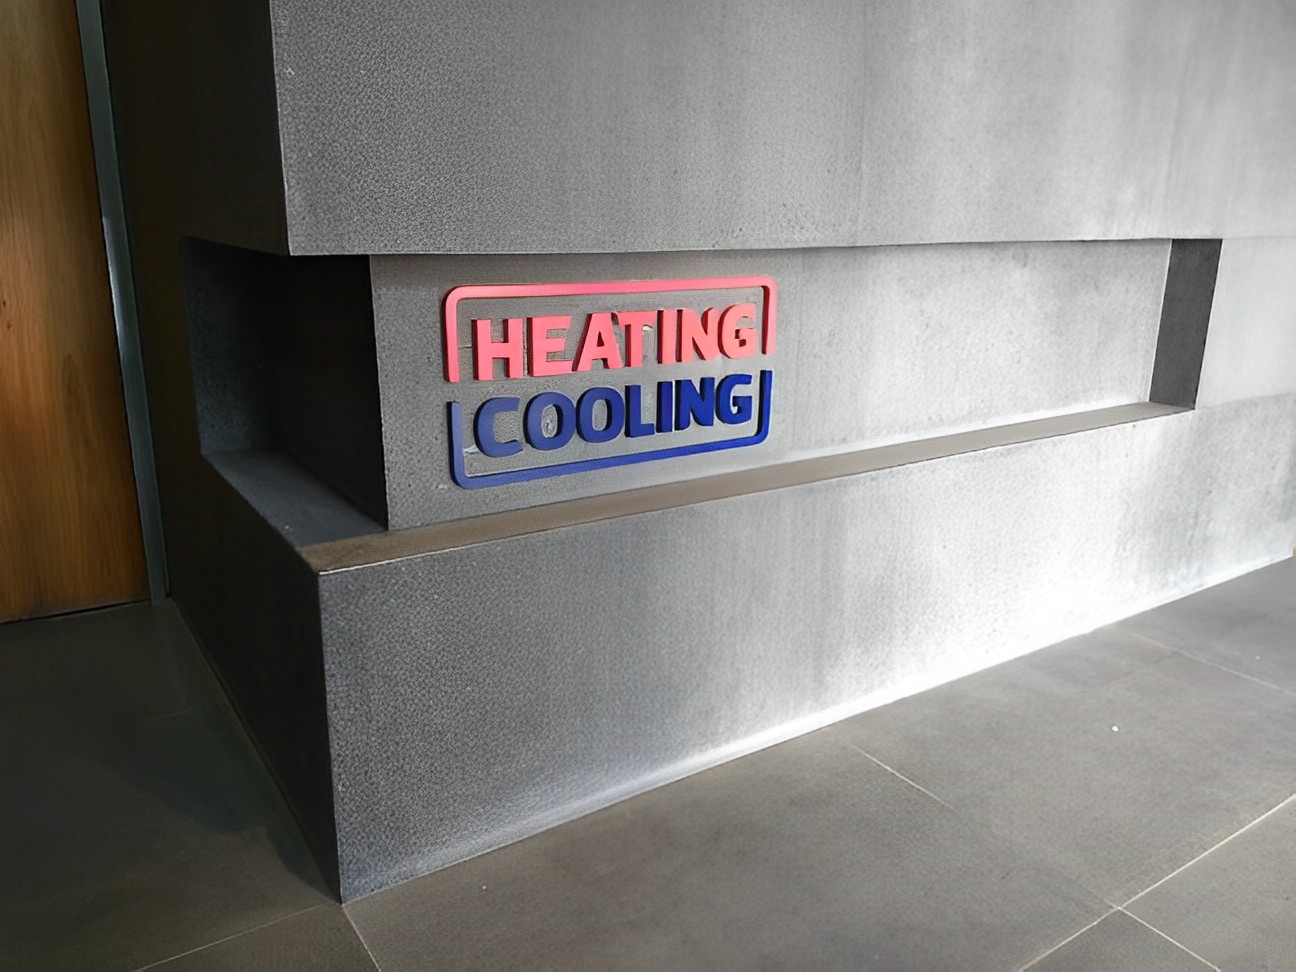 Heating Cooling ABRE VAGAS em SP, RJ e BA